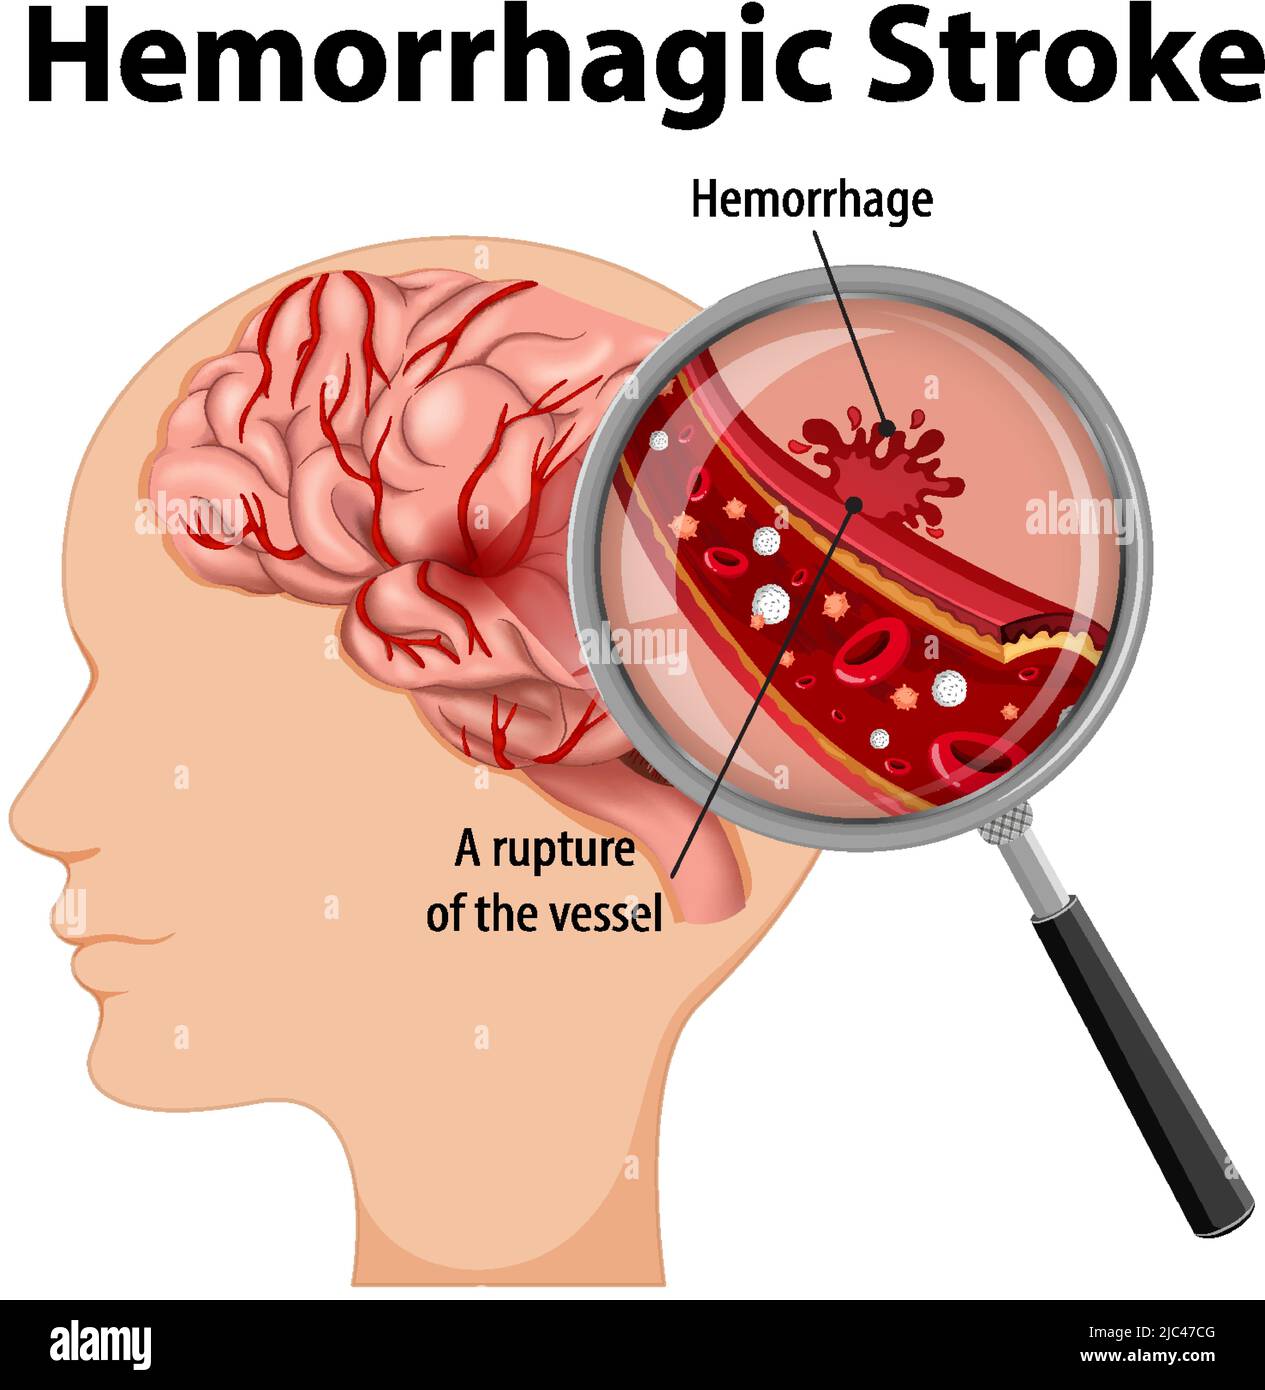 Human With Hemorrhagic Stroke Illustration Stock Vector Image And Art Alamy